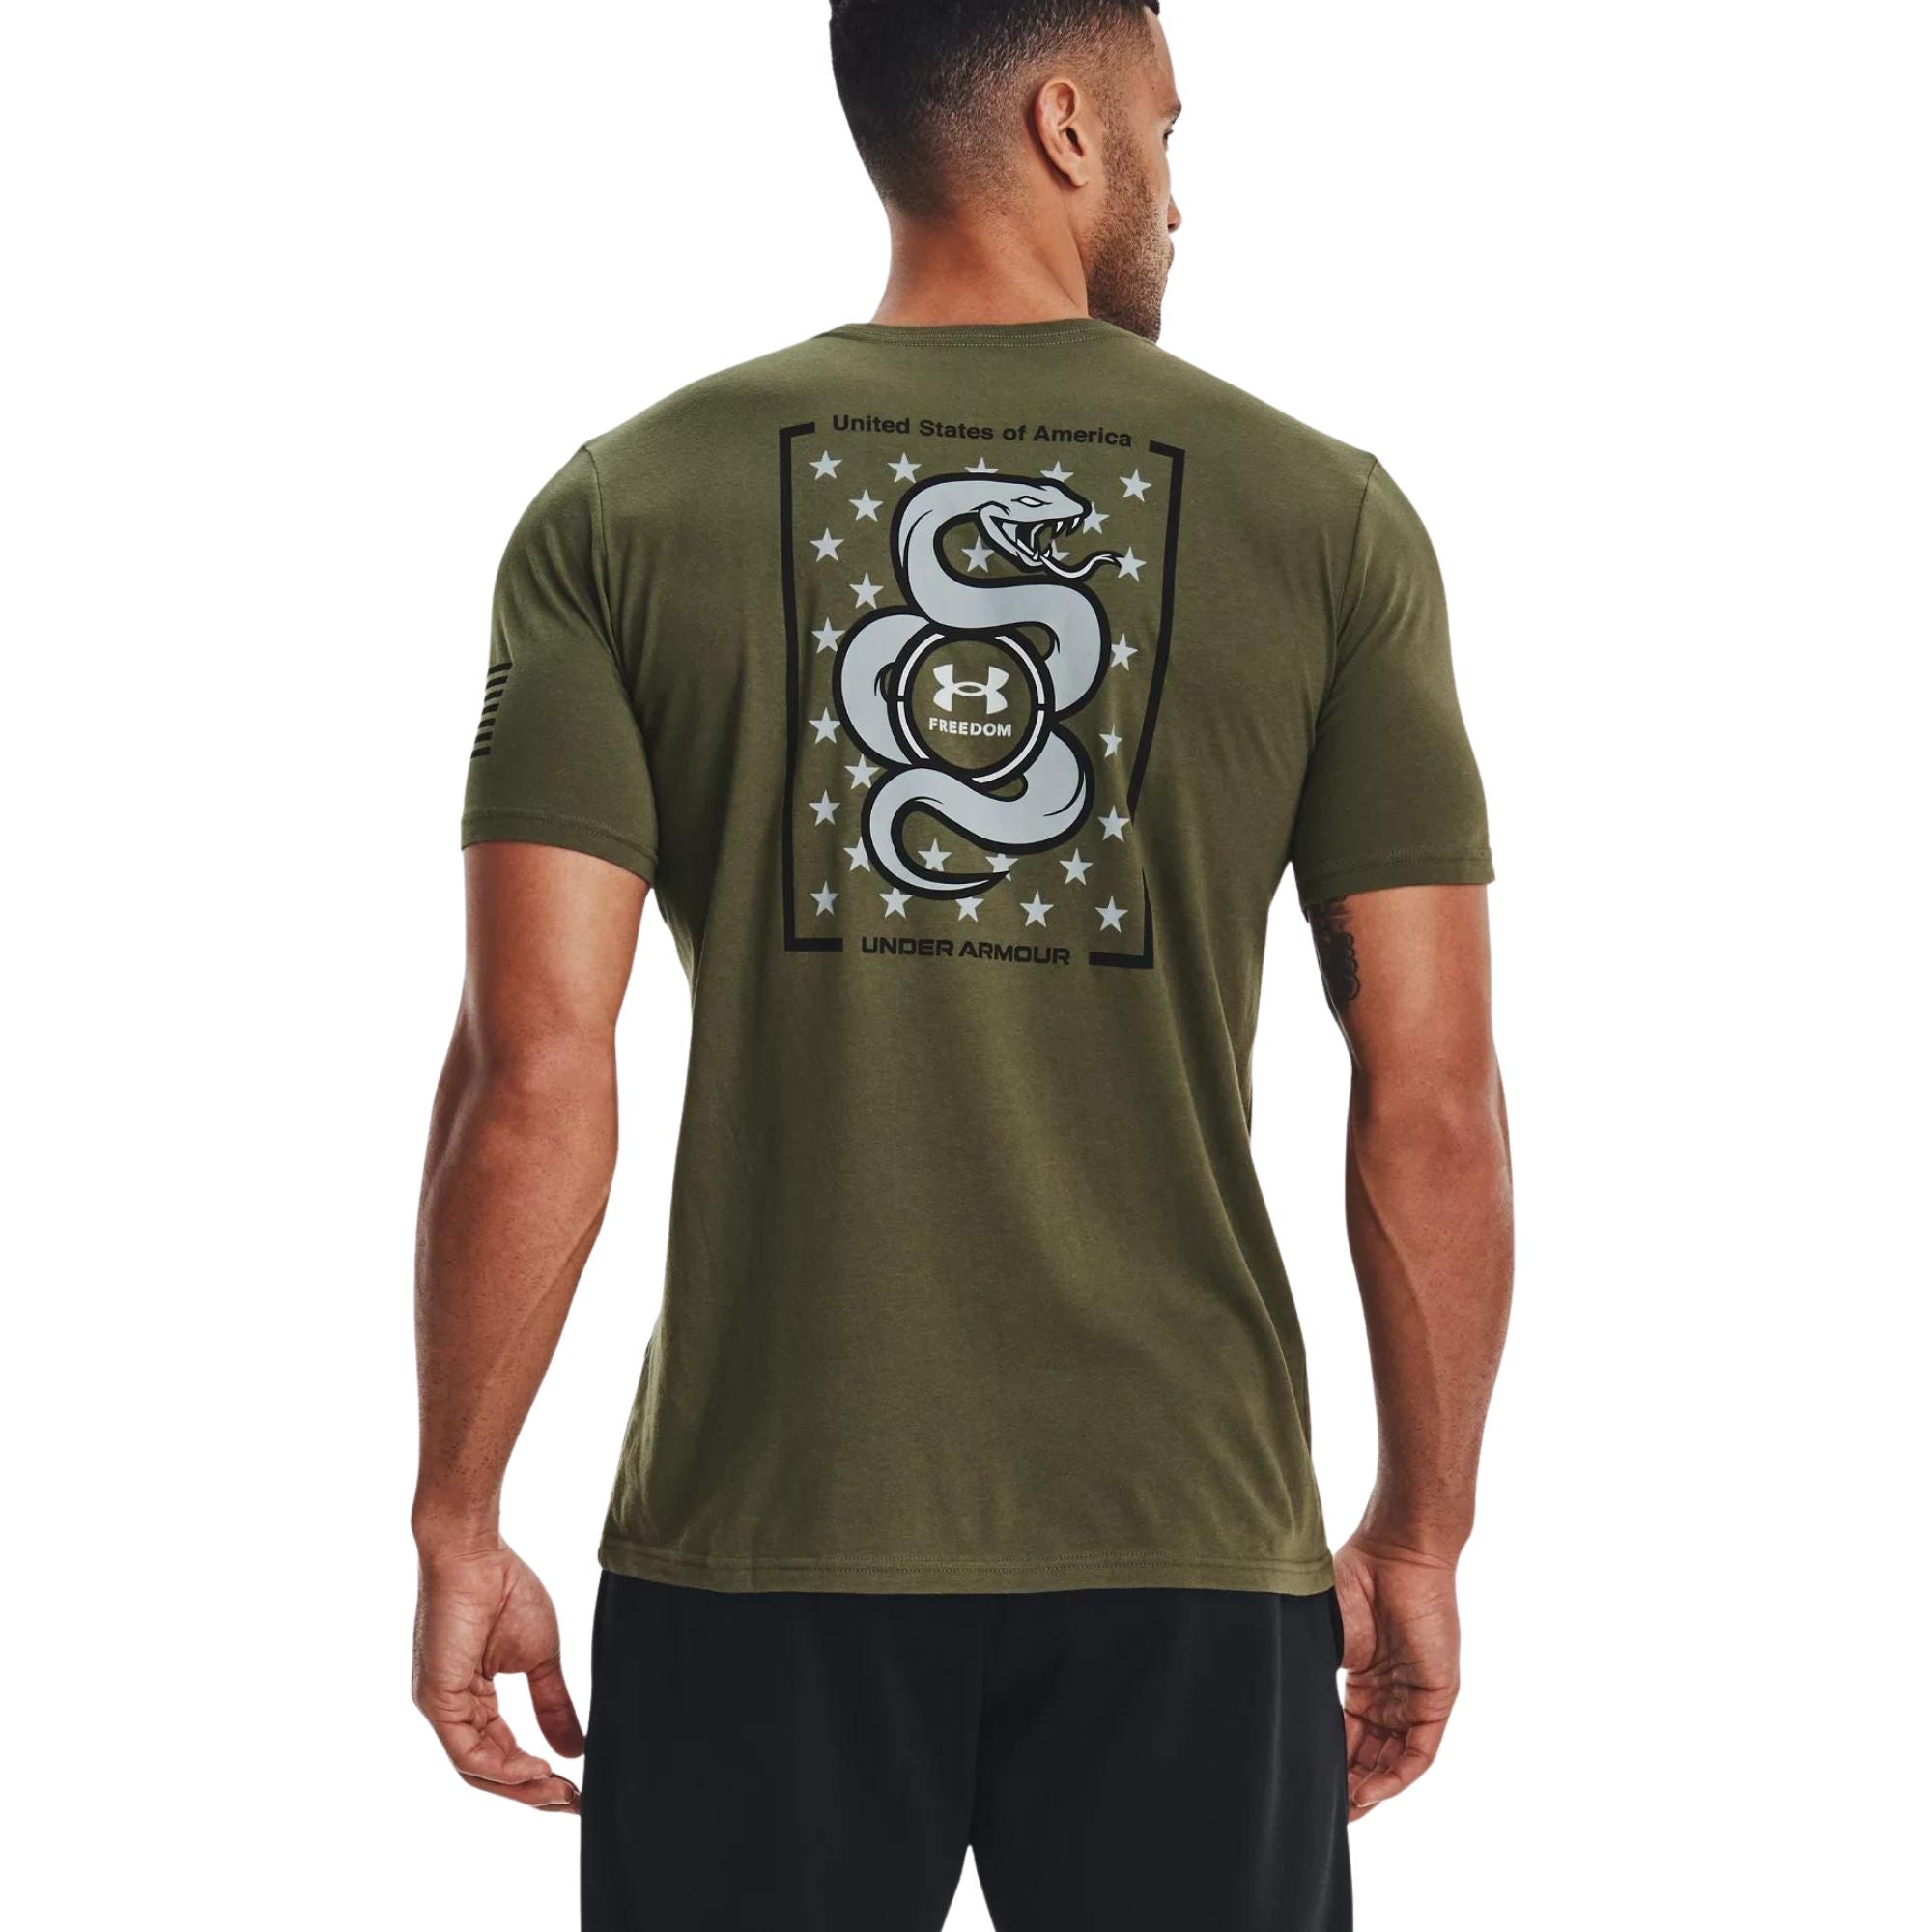 Under Armour Tac Mission Made T-Shirt, Men's Marine OD Green/Black